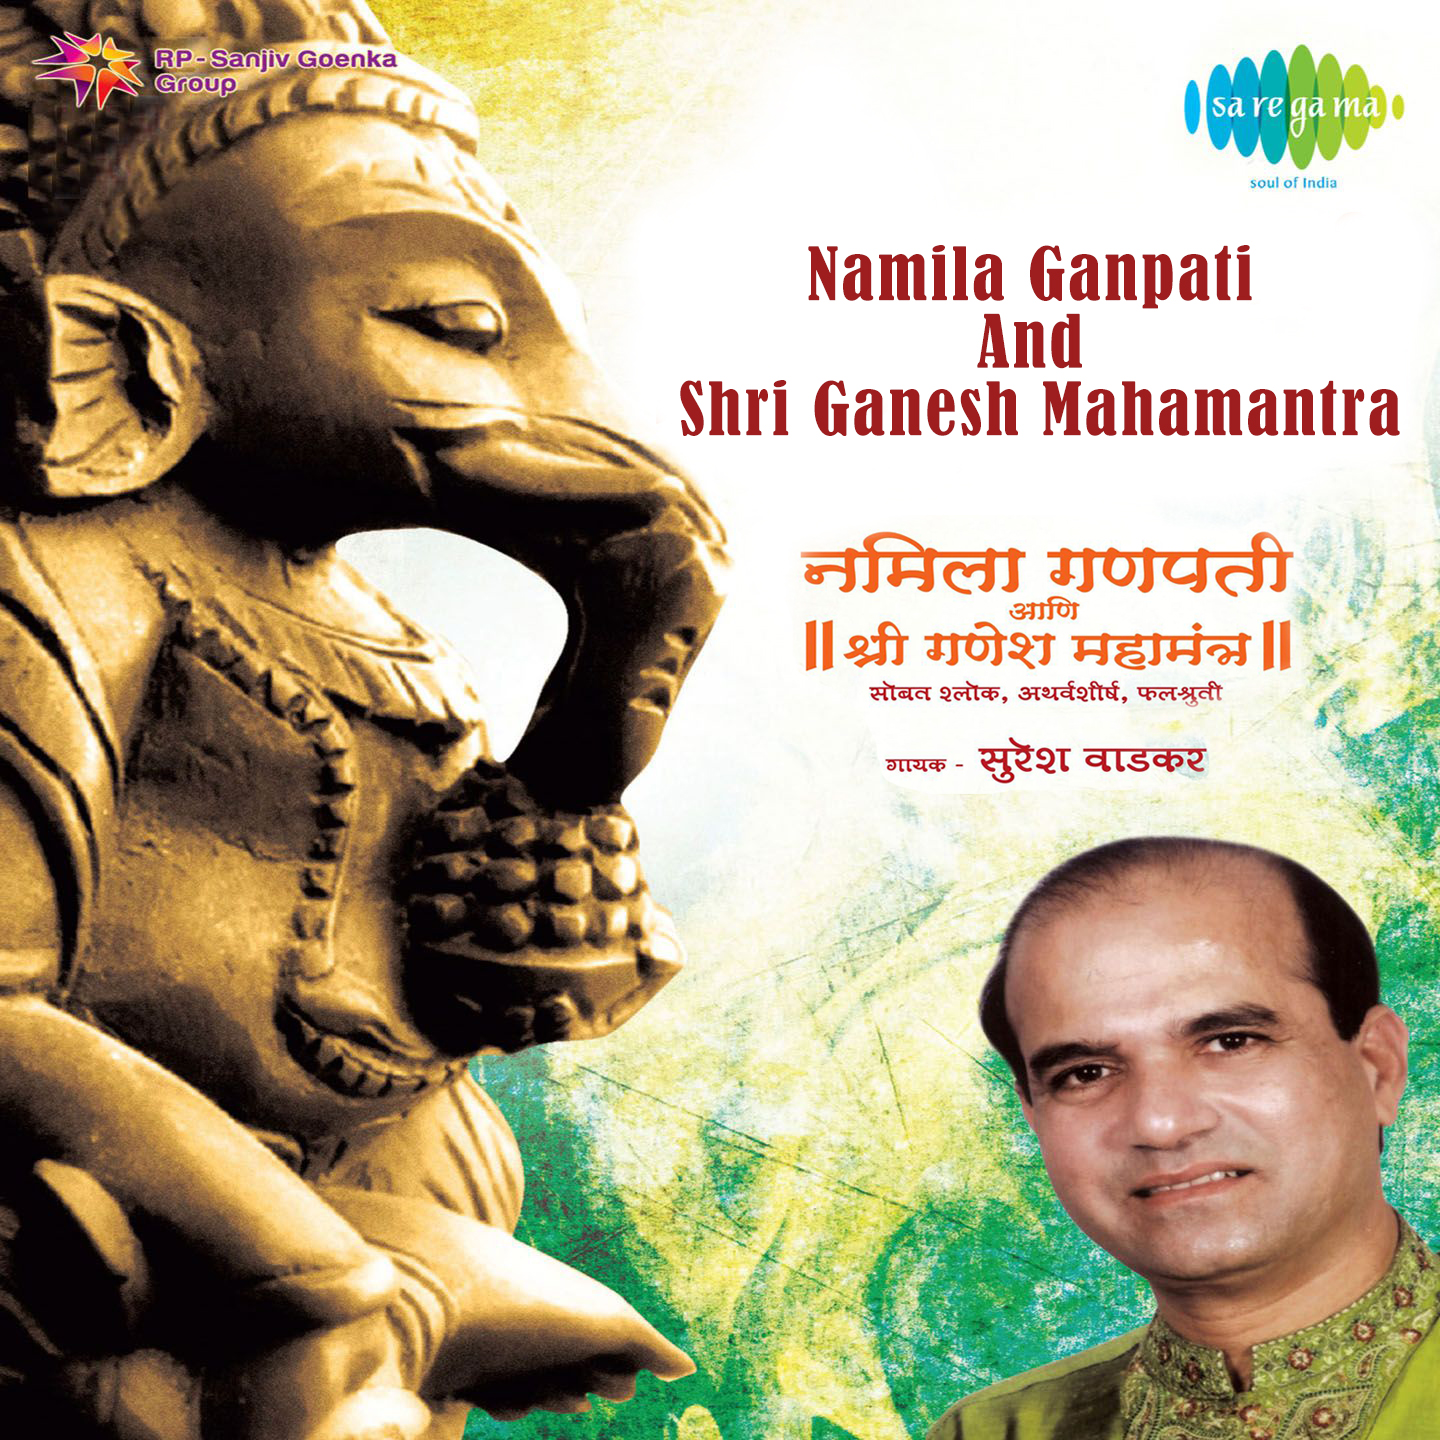 Namila Ganpati And Shri Ganesh Mahamantra